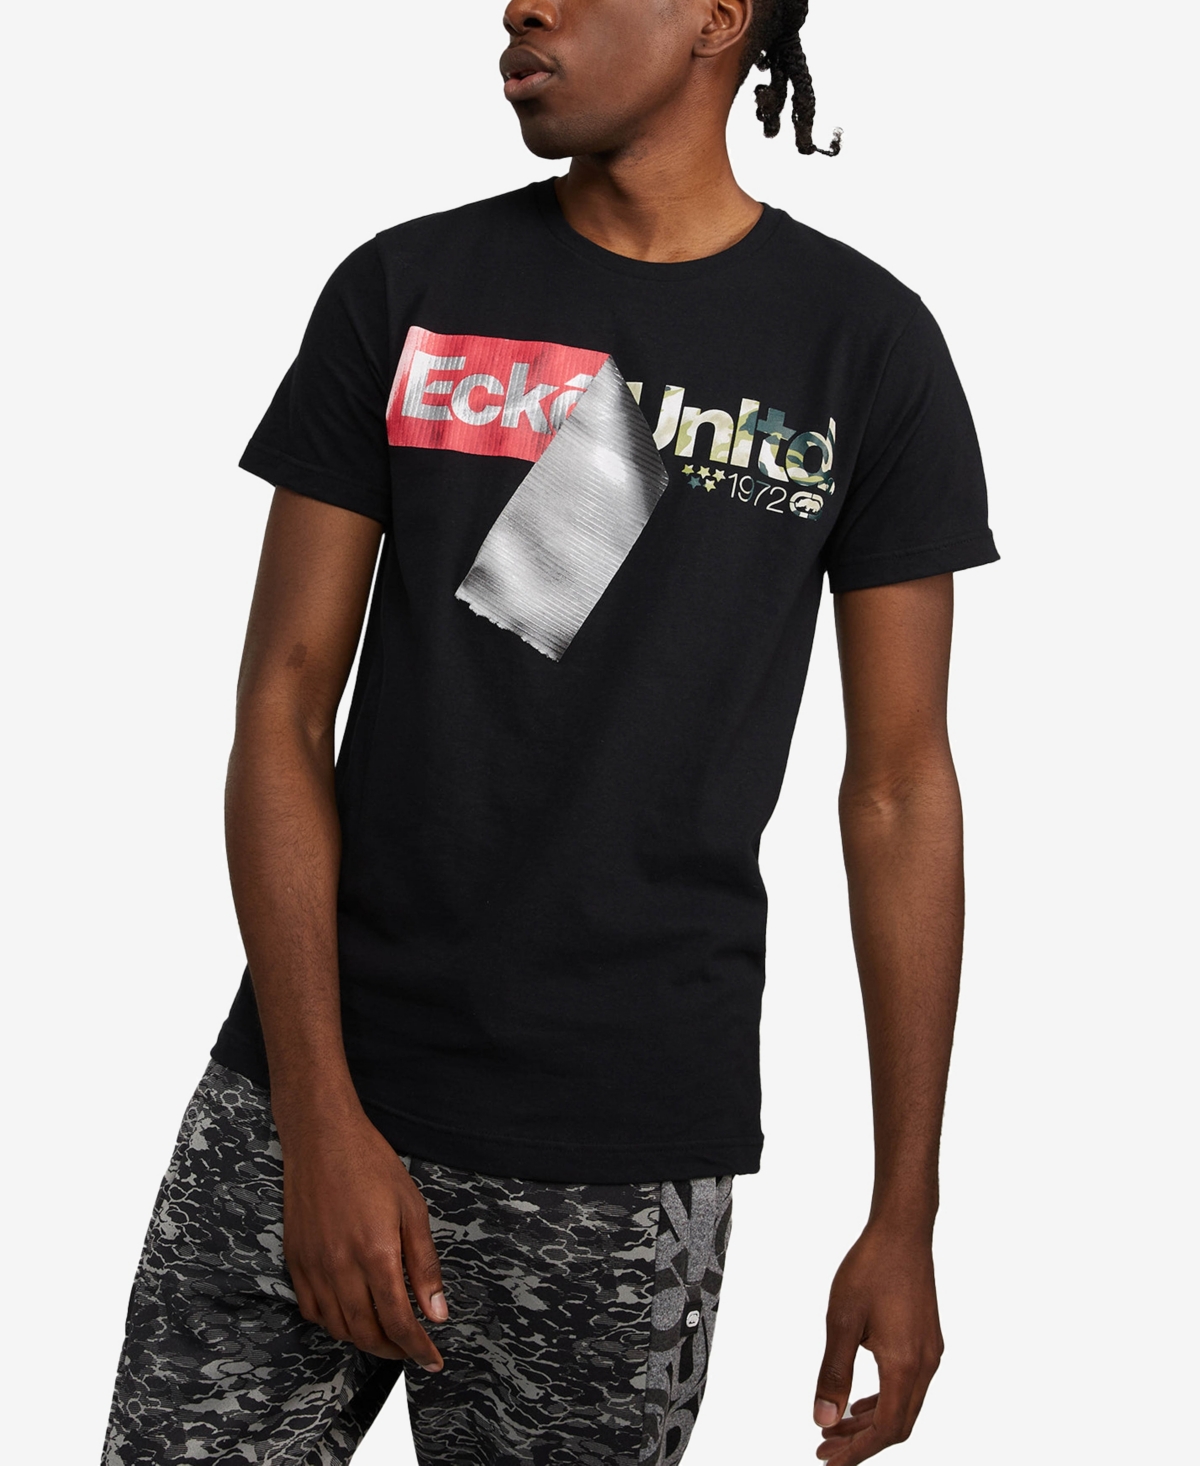 Ecko Unltd Men's Big and Tall Reveal Graphic T-shirt